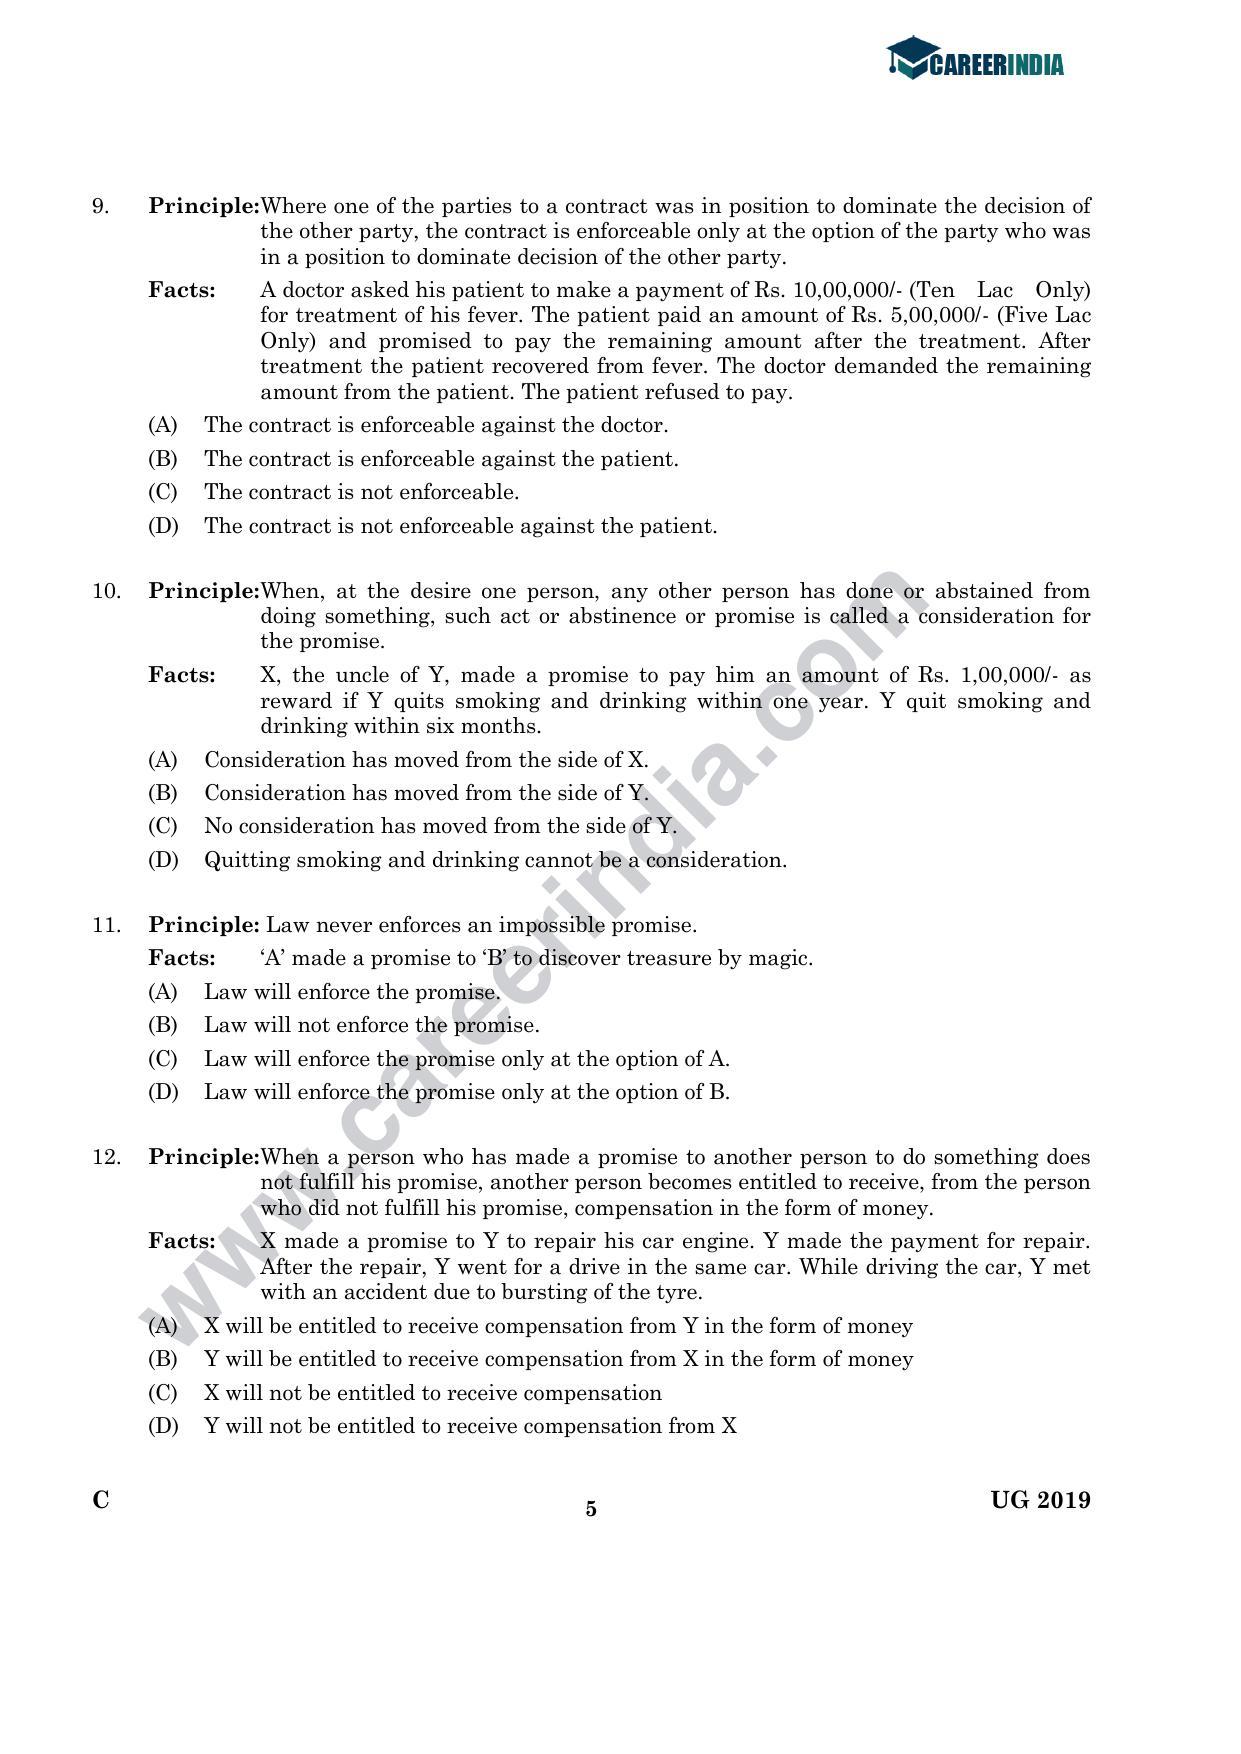 CLAT 2019 UG Legal-Aptitude Question Paper - Page 4